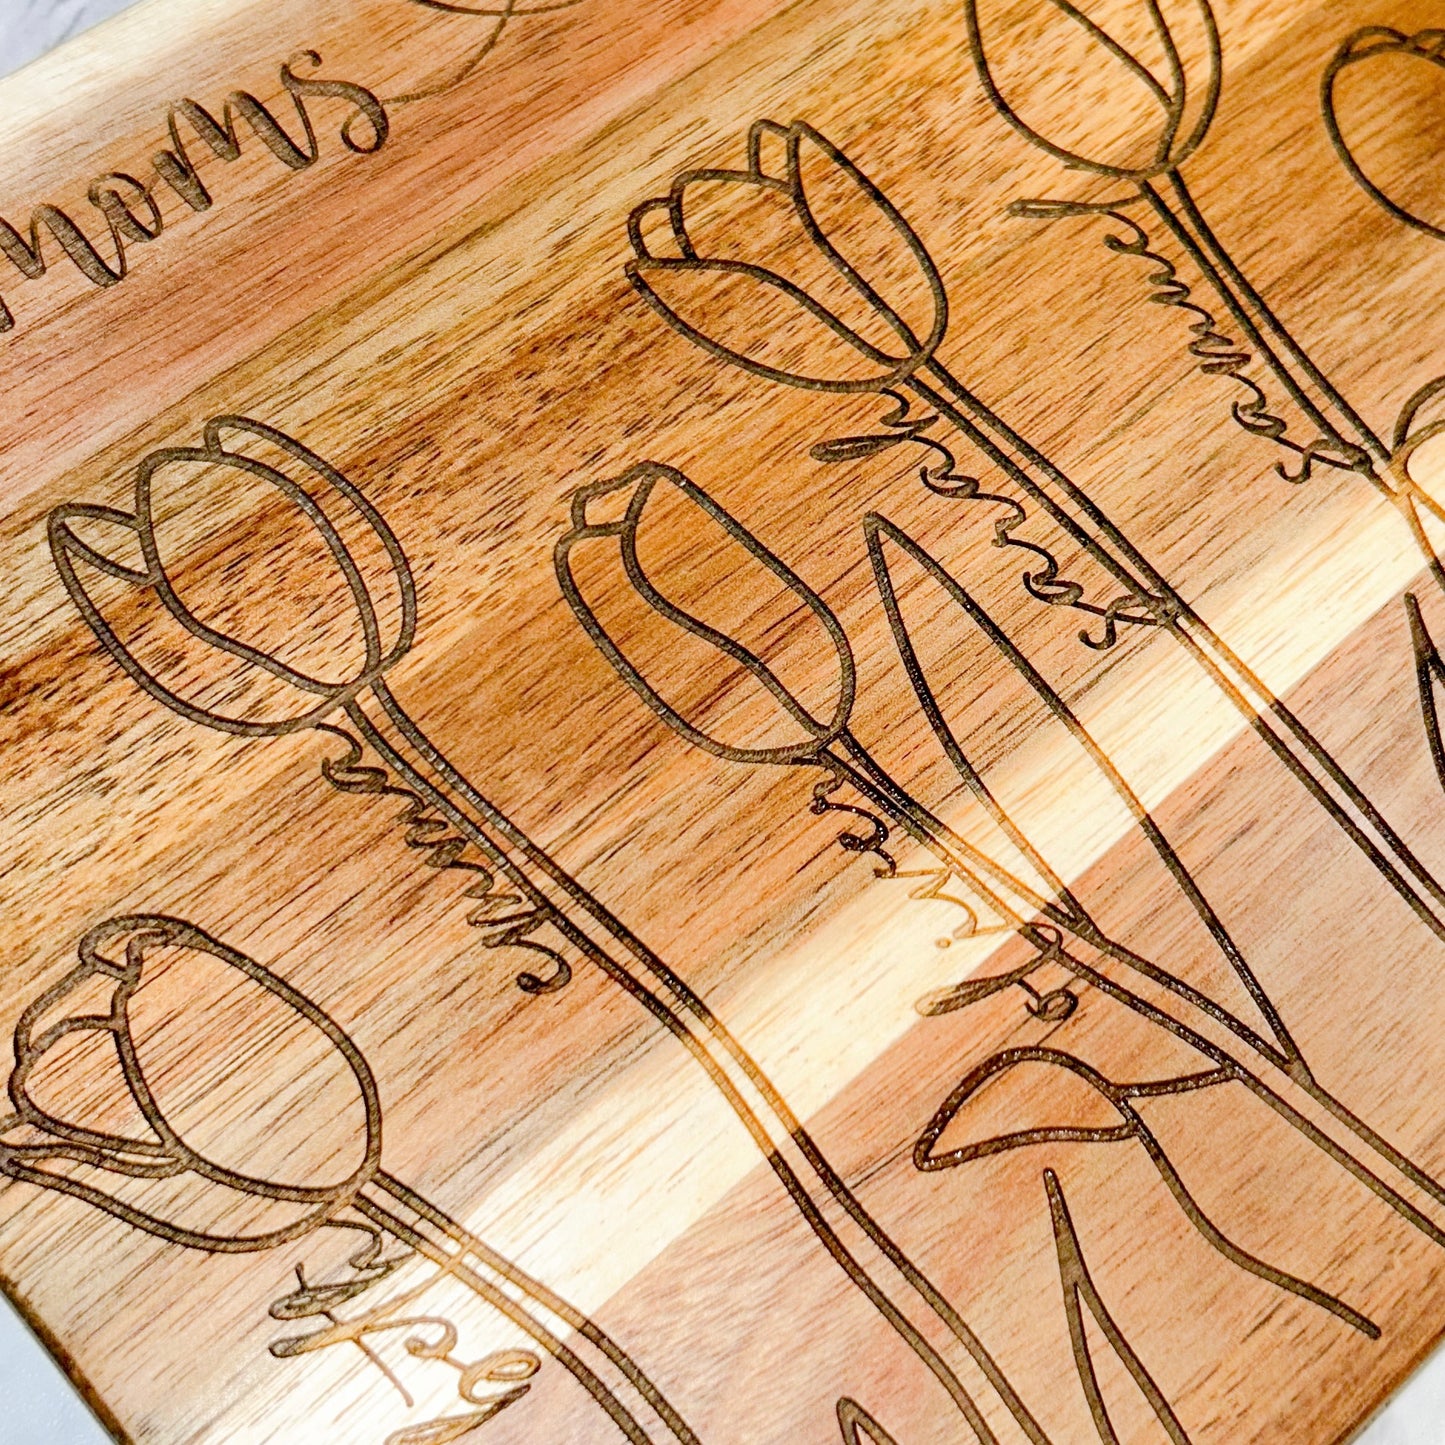 "Mom's Garden" Custom Engraved Wood Serving Board